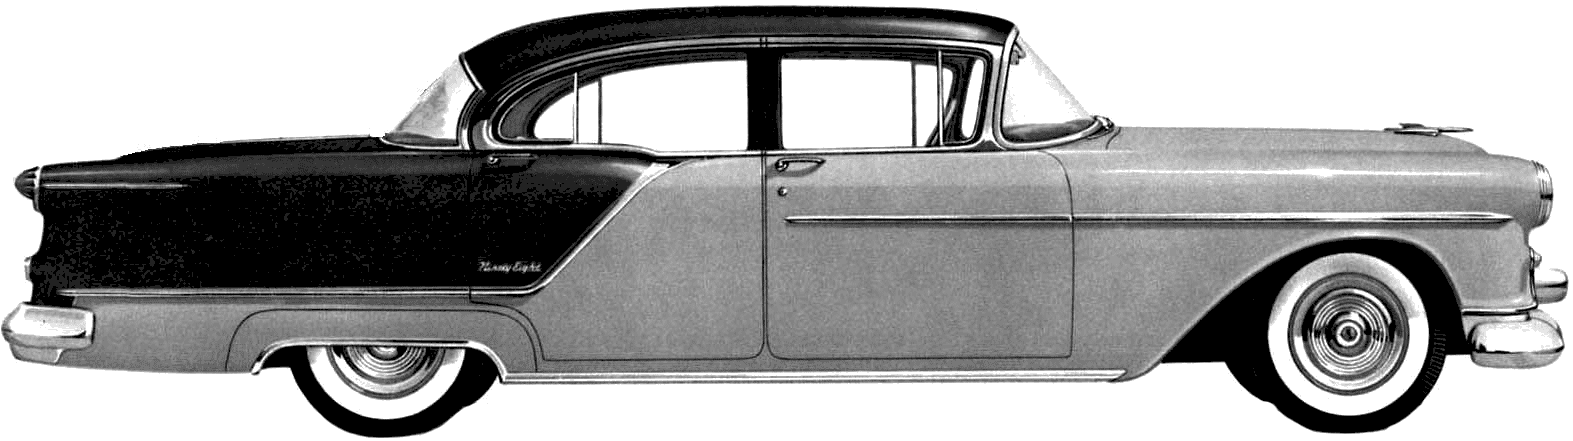 Modèle Oldsmobile 98 Berline 1954